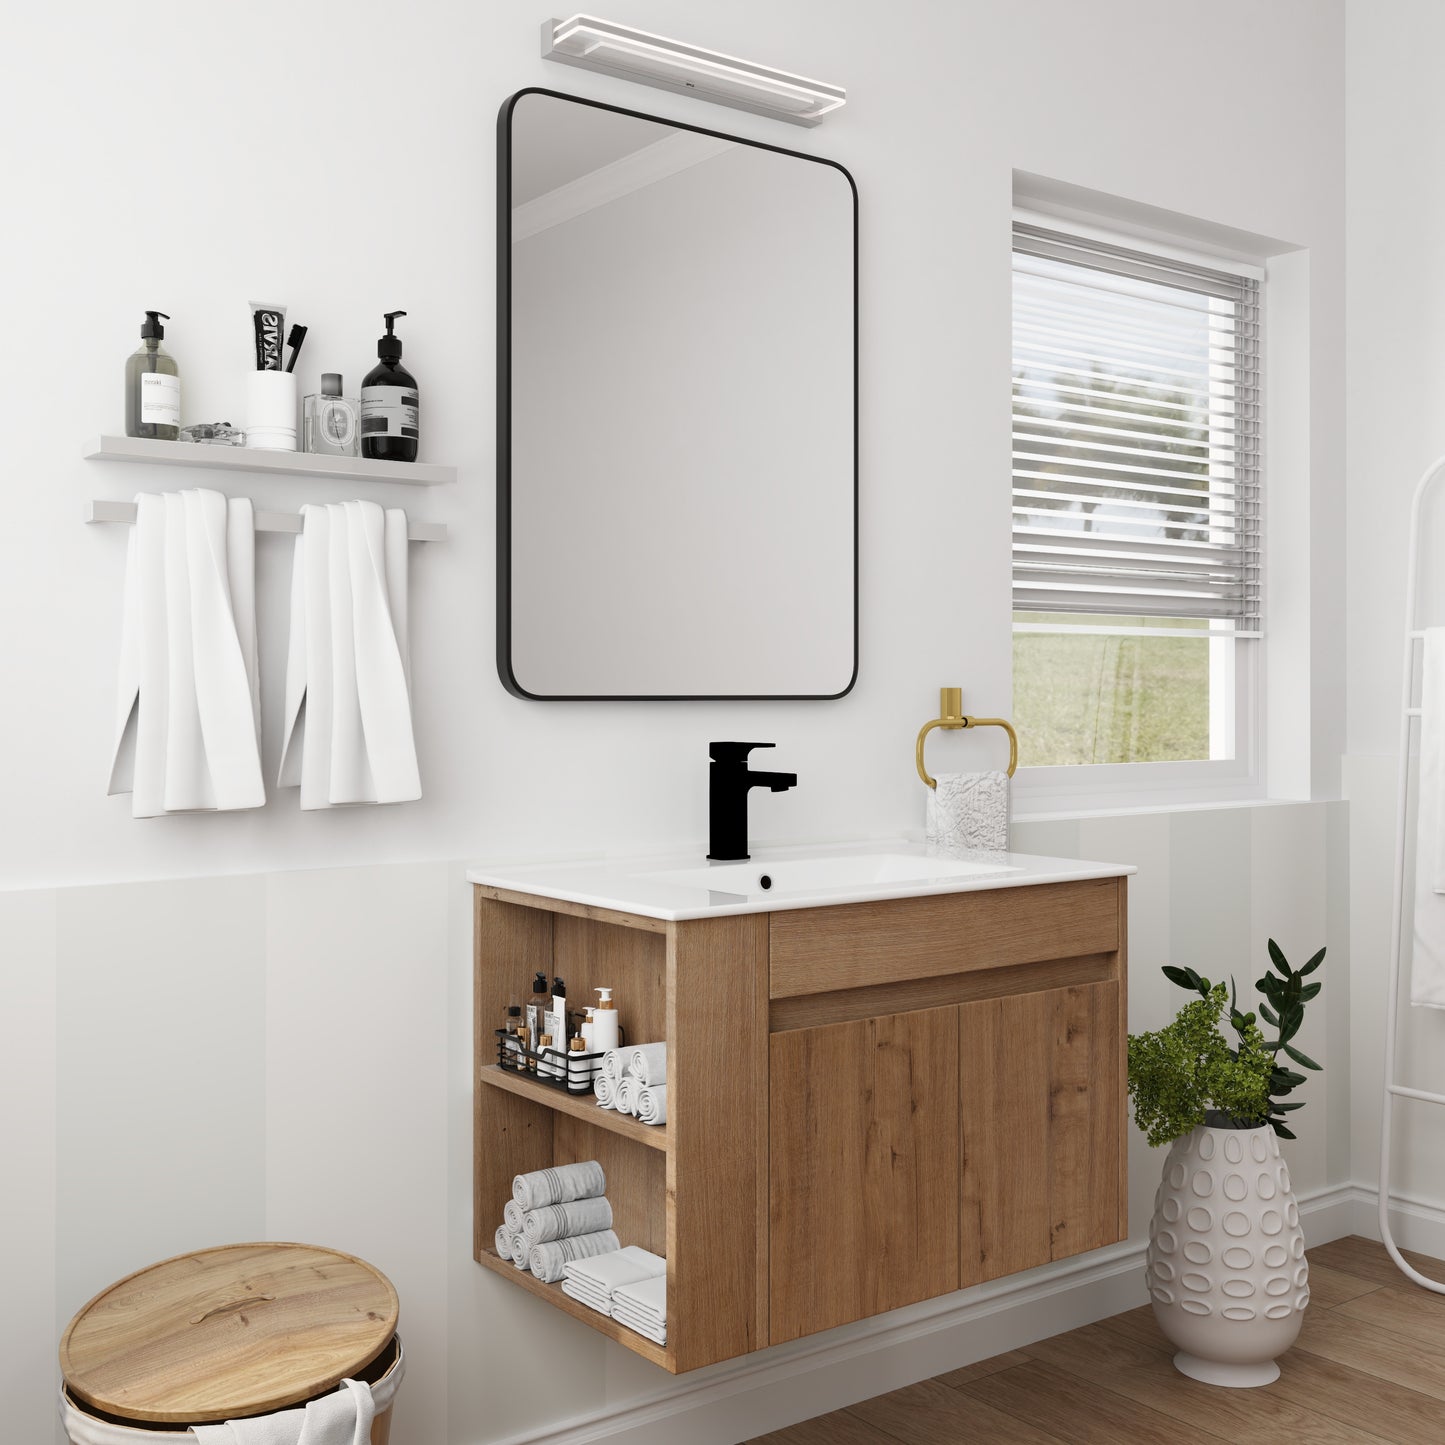 30" Bathroom Vanity With White Ceramic Basin